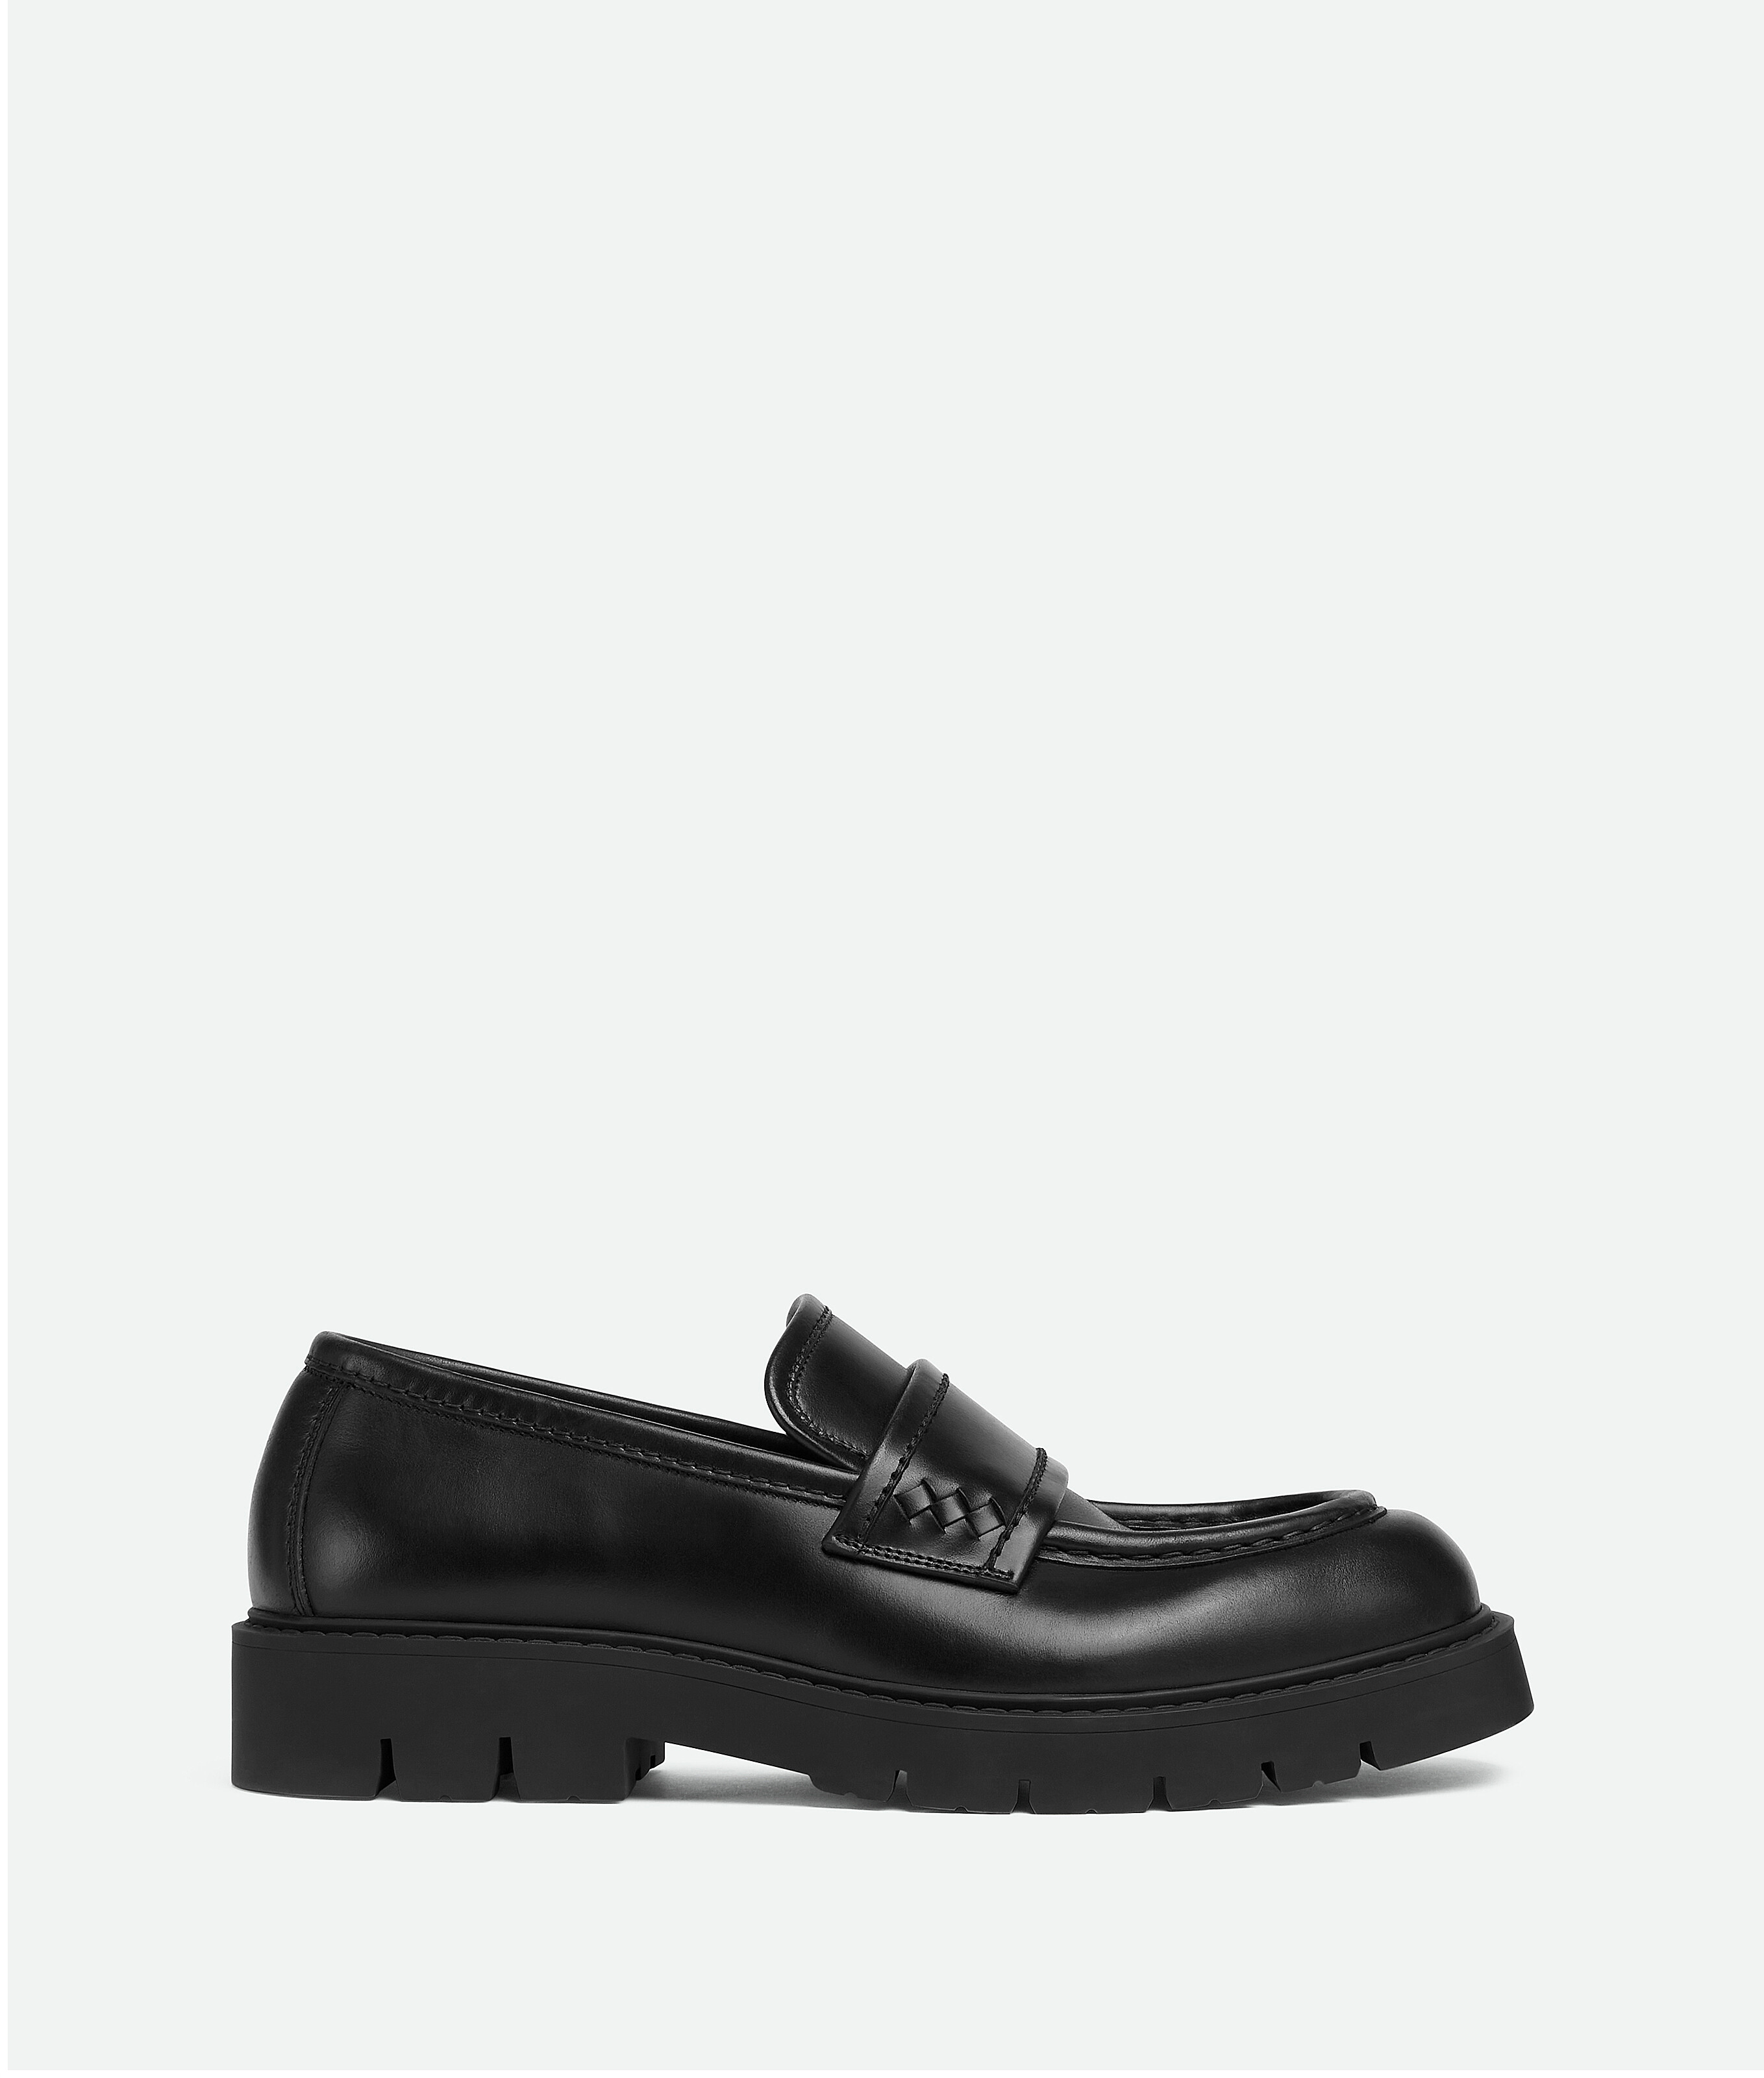 Bottega Veneta® Men's Haddock Loafer Black. Shop online now.